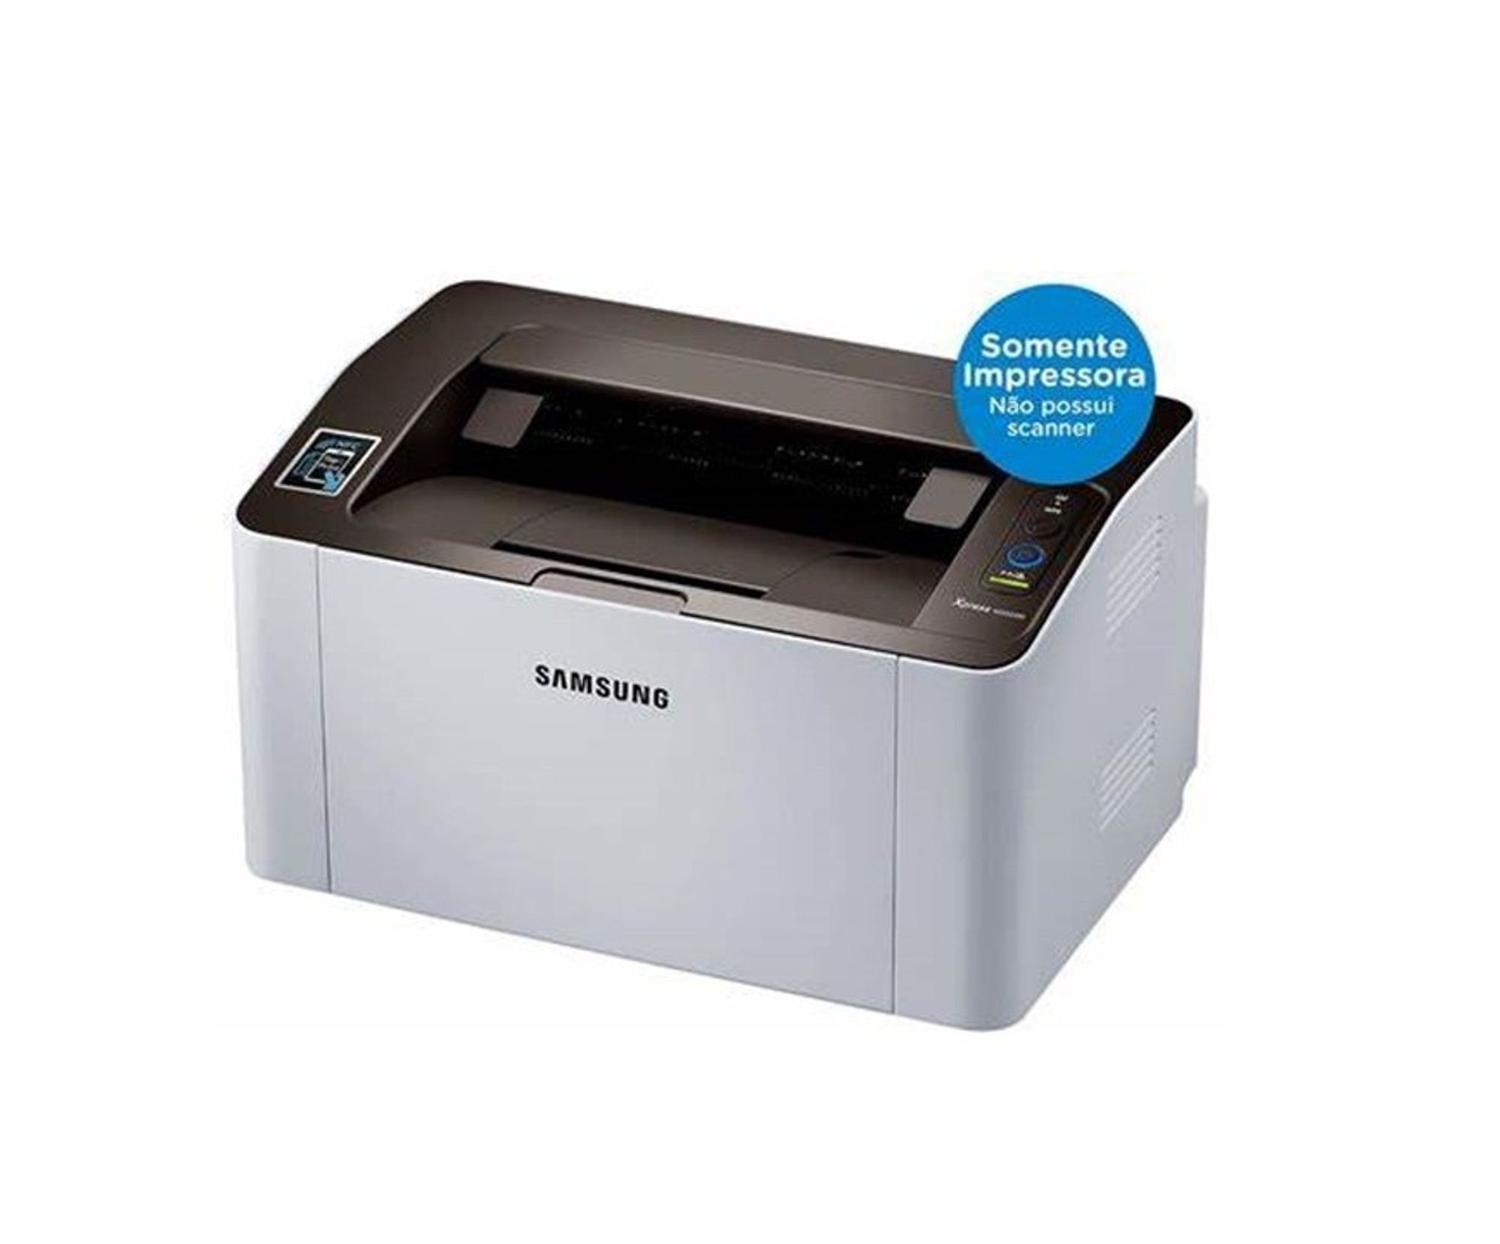 Samsung 2020 купить. Samsung m2020. Принтер самсунг Xpress m2020. Принтер Samsung m 20 20. Samsung Xpress m2020, m2070.